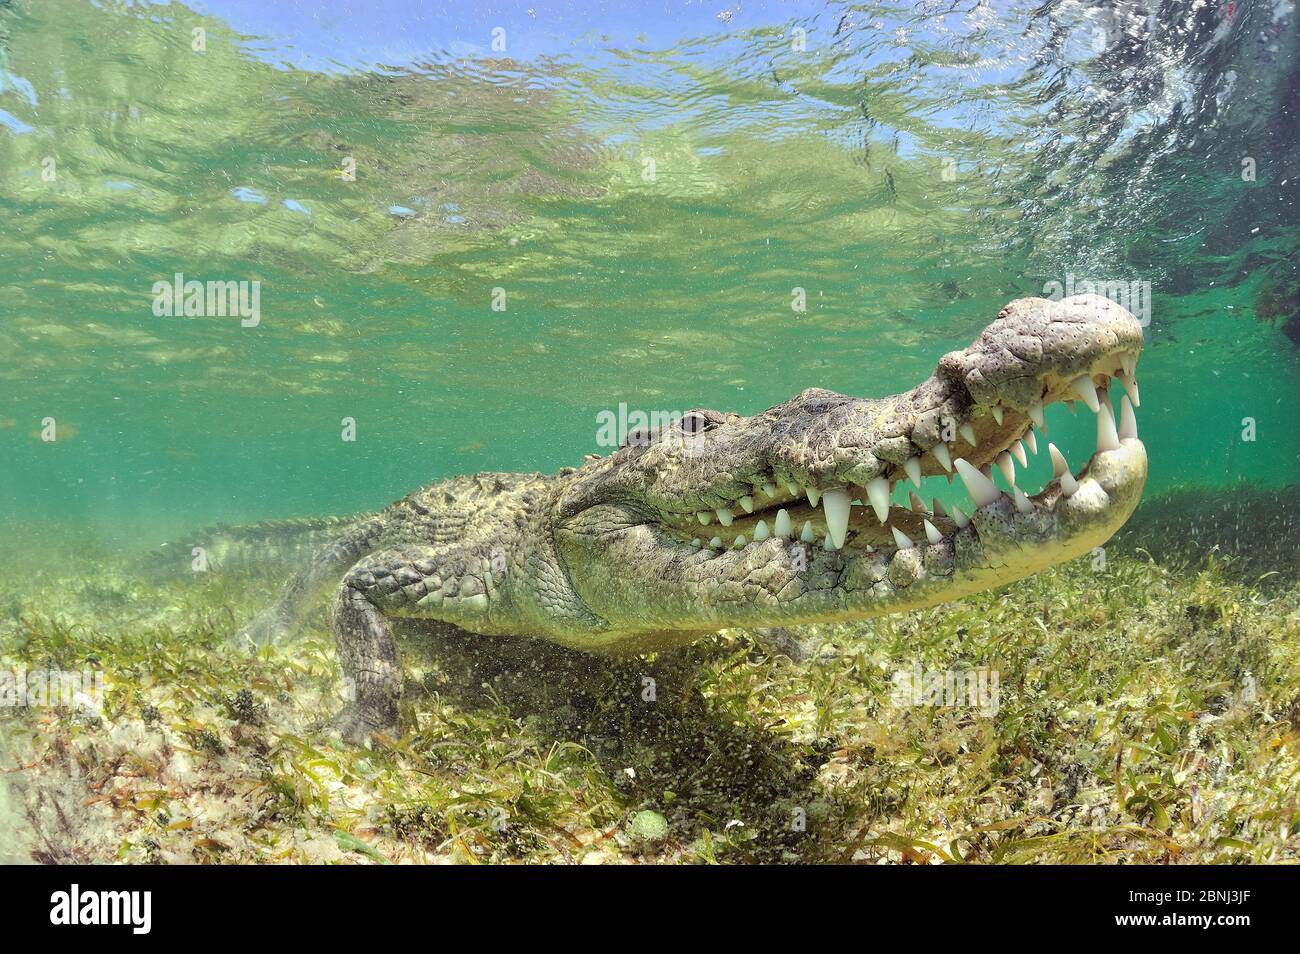 American crocodile (Crocodylus acutus) Yucatan Peninsula, Mexico Stock Photo